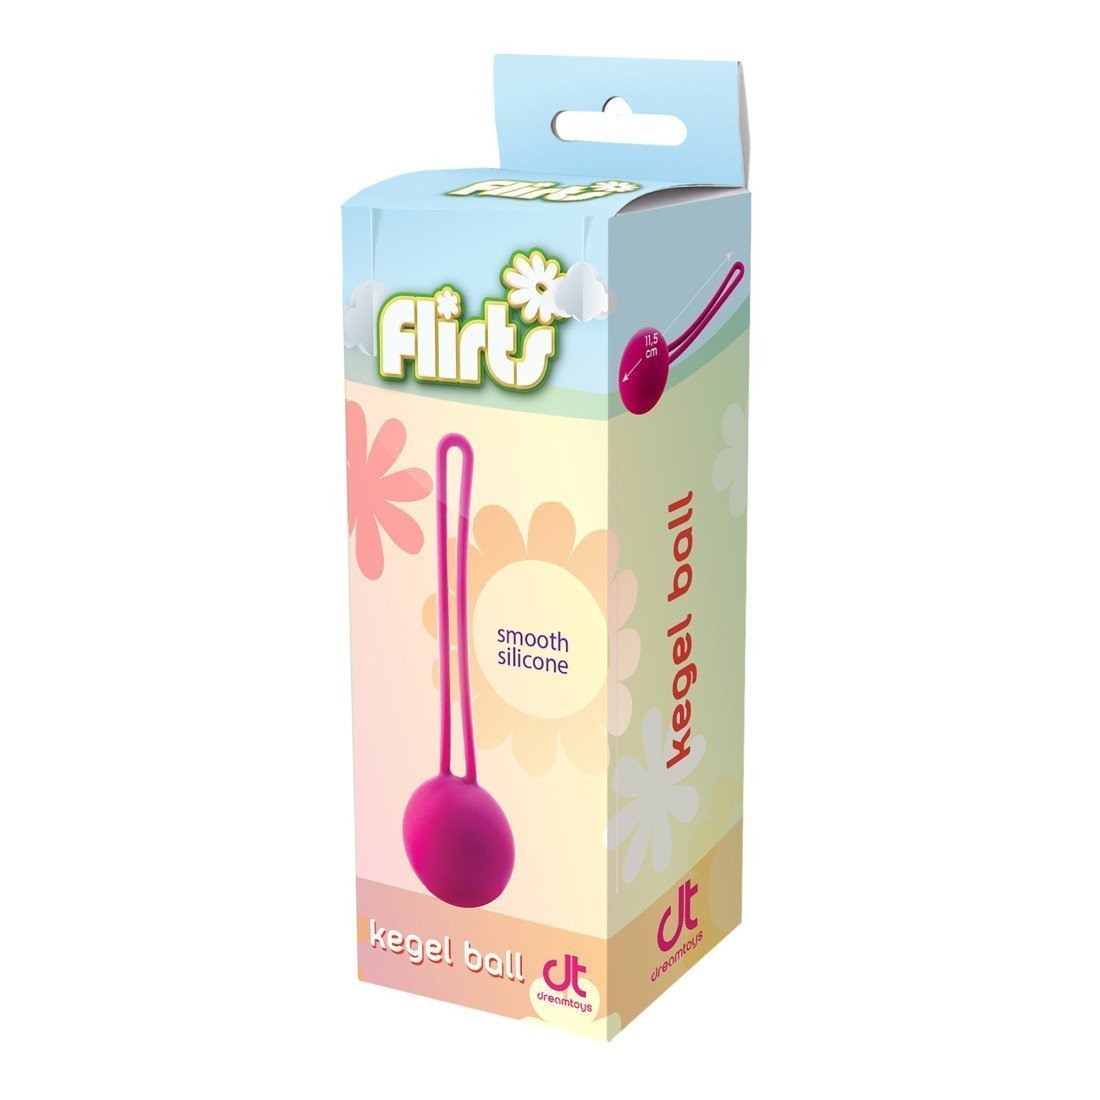 Vaginalinis kamuoliukas „Flirts Kegel Ball“ - Dream Toys